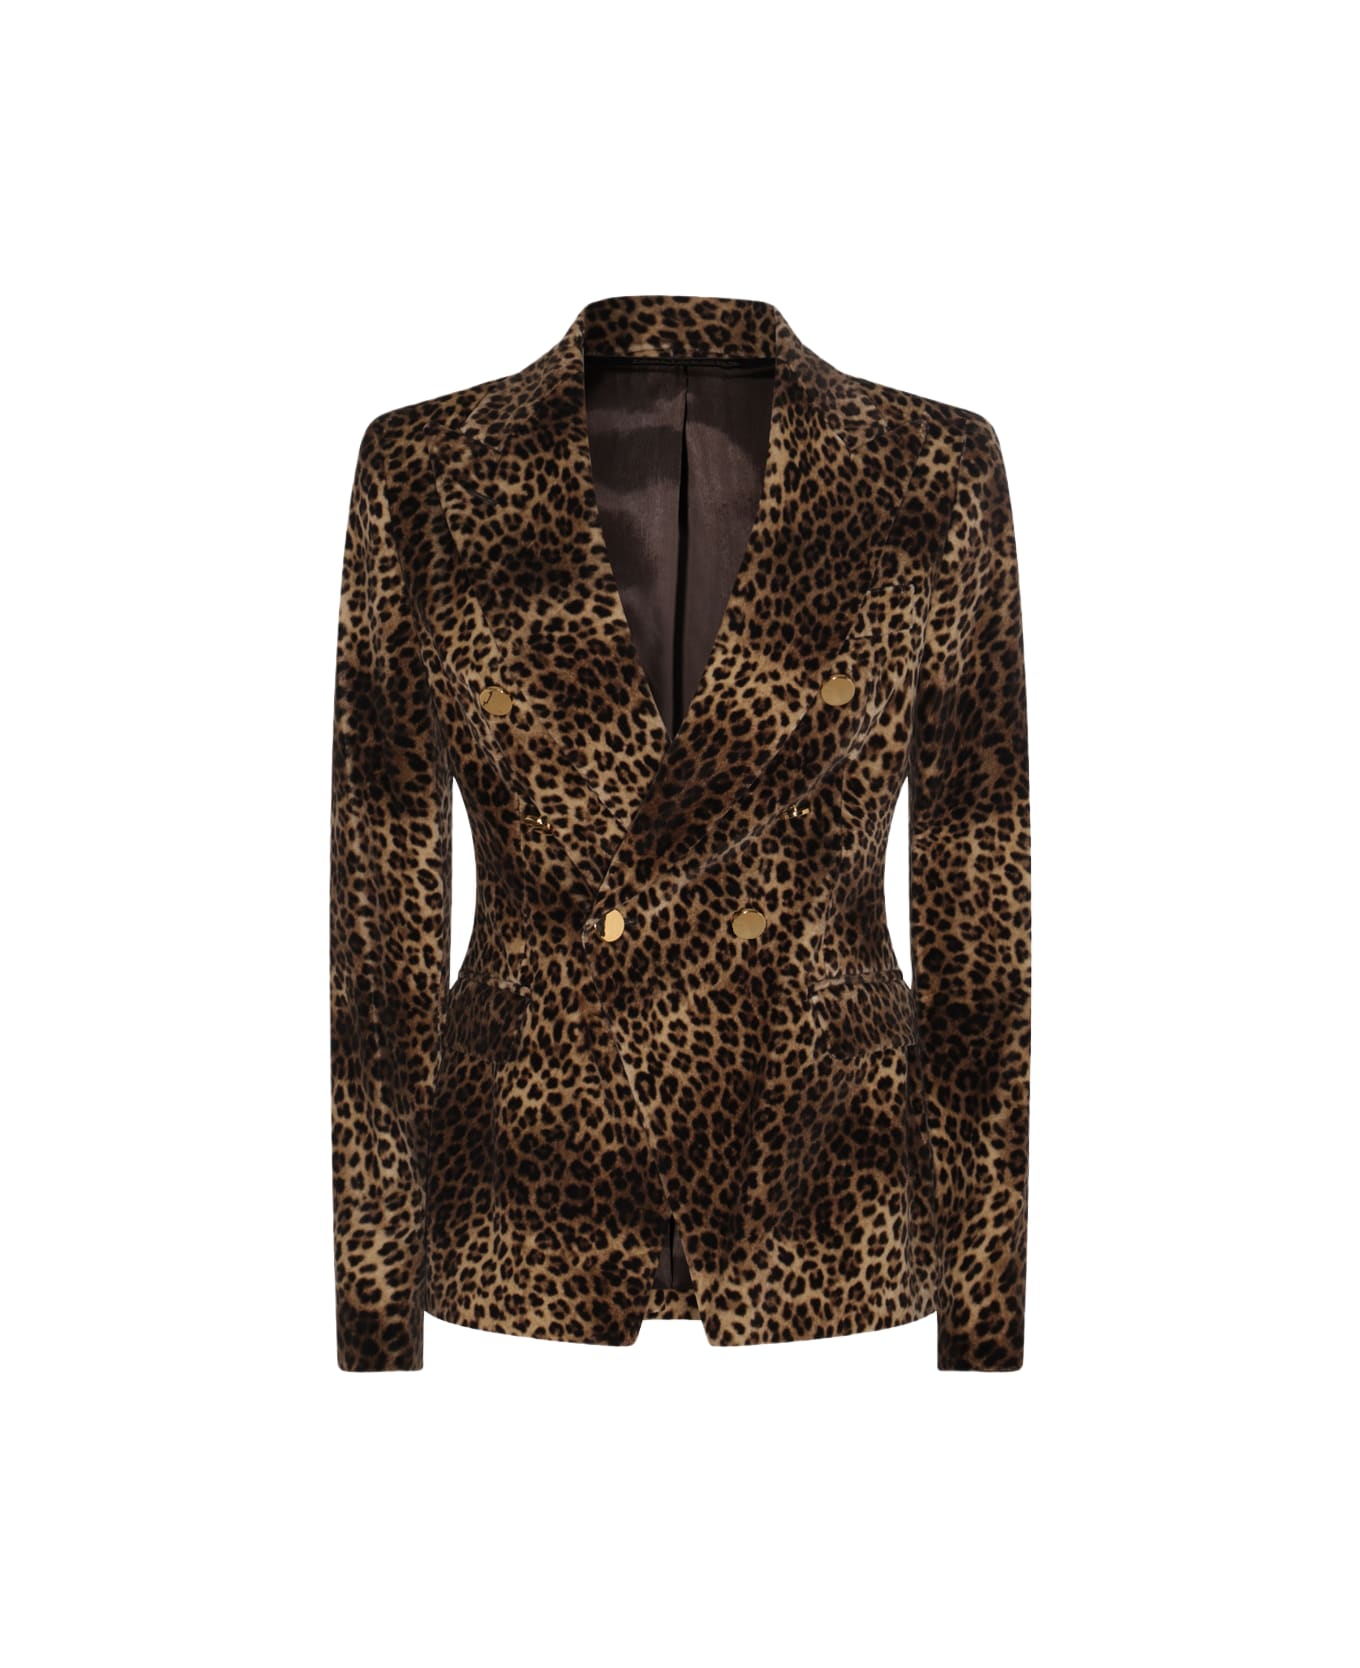 Tagliatore Leopard Virgin Wool And Cashmere Blend Jalicya Blazer - Brown